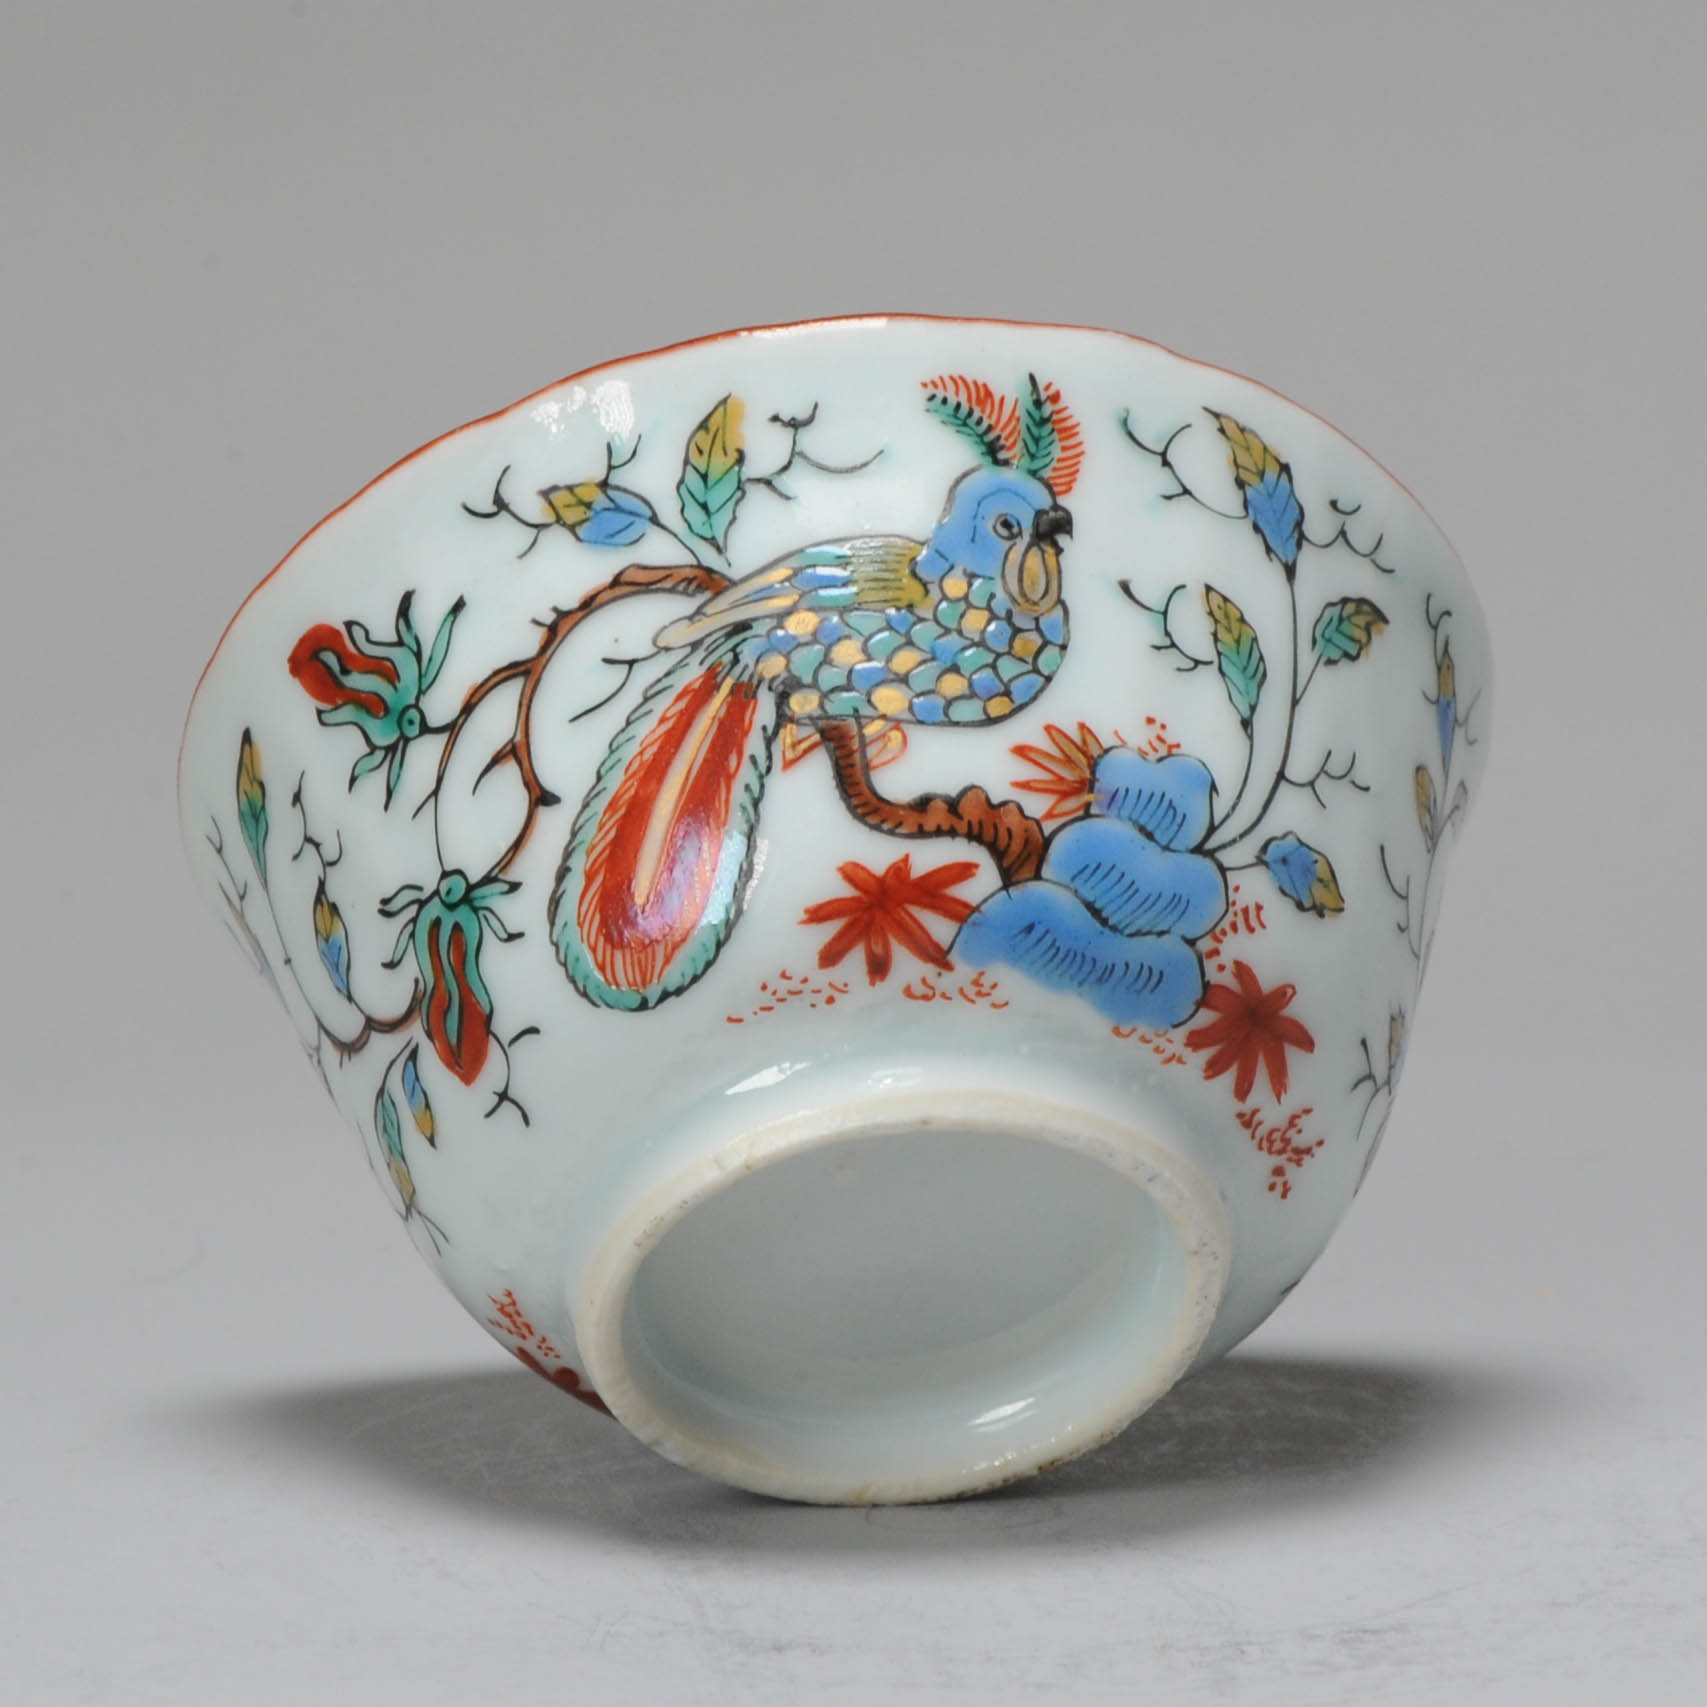 Antique Rare Kangxi Period Chinese Porcelain Bowl Amsterdam Bont Parrot